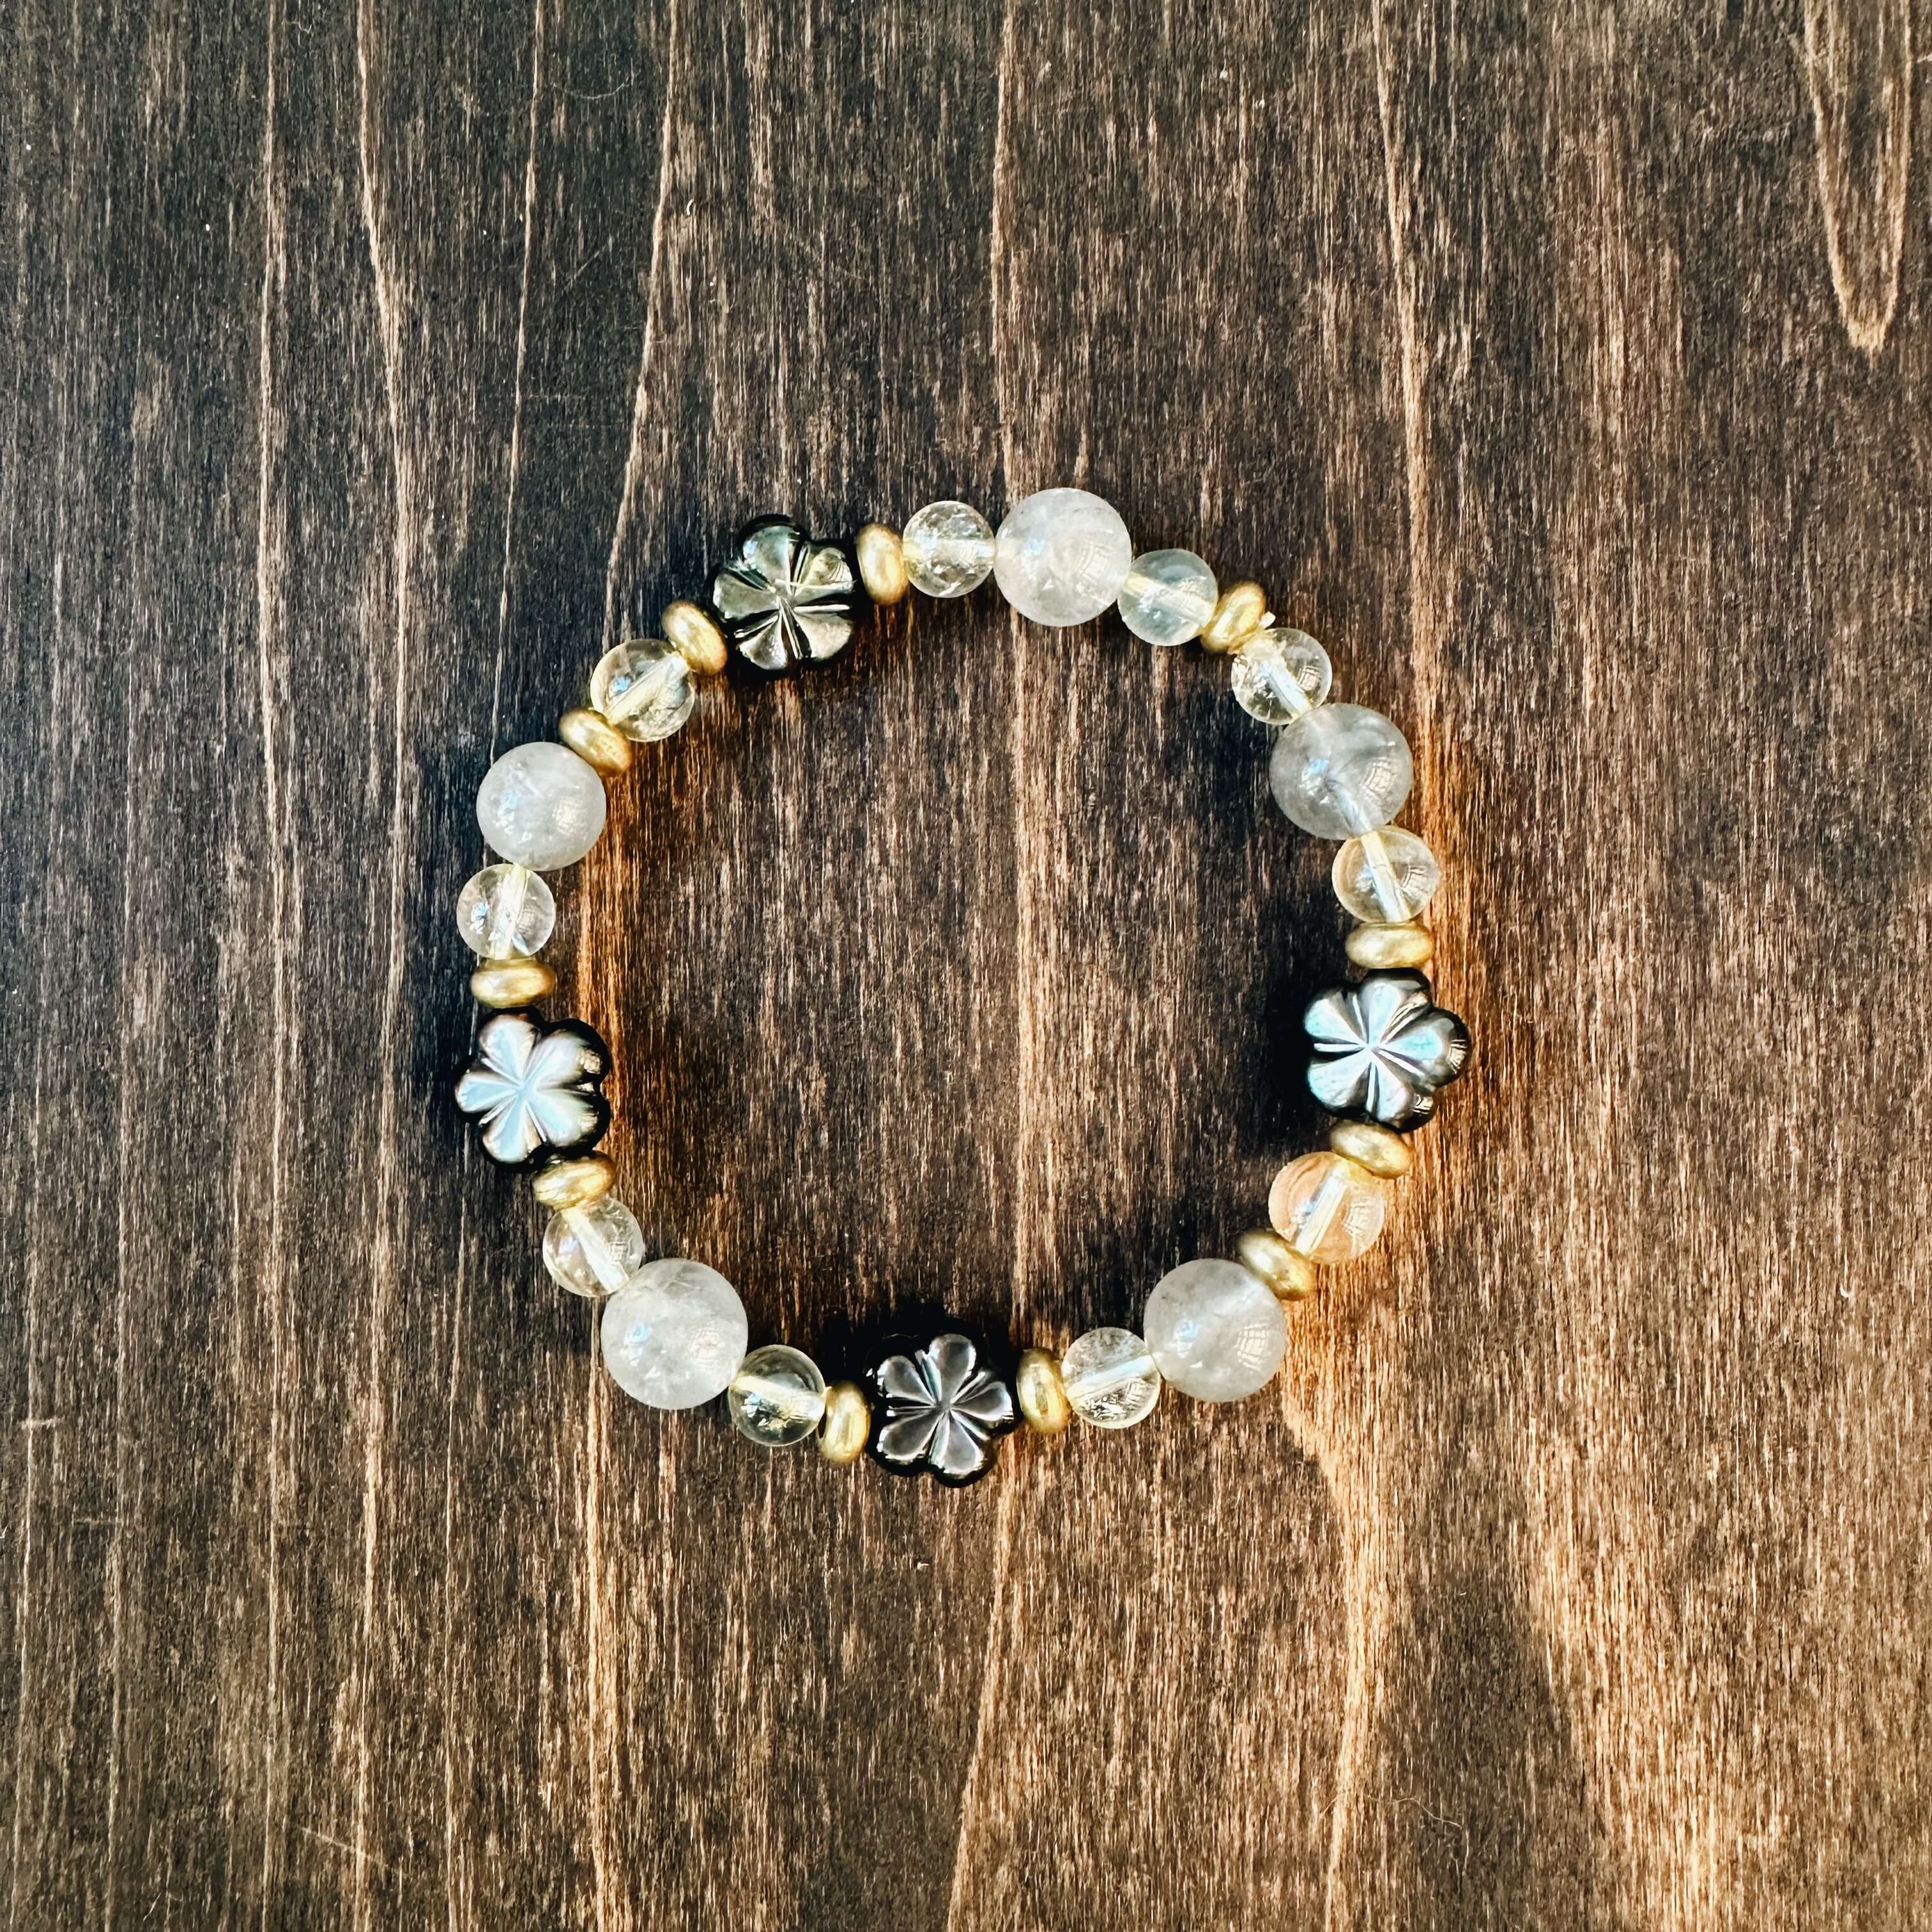 Abalone, Labradorite, Citrine, and Brass Bracelet